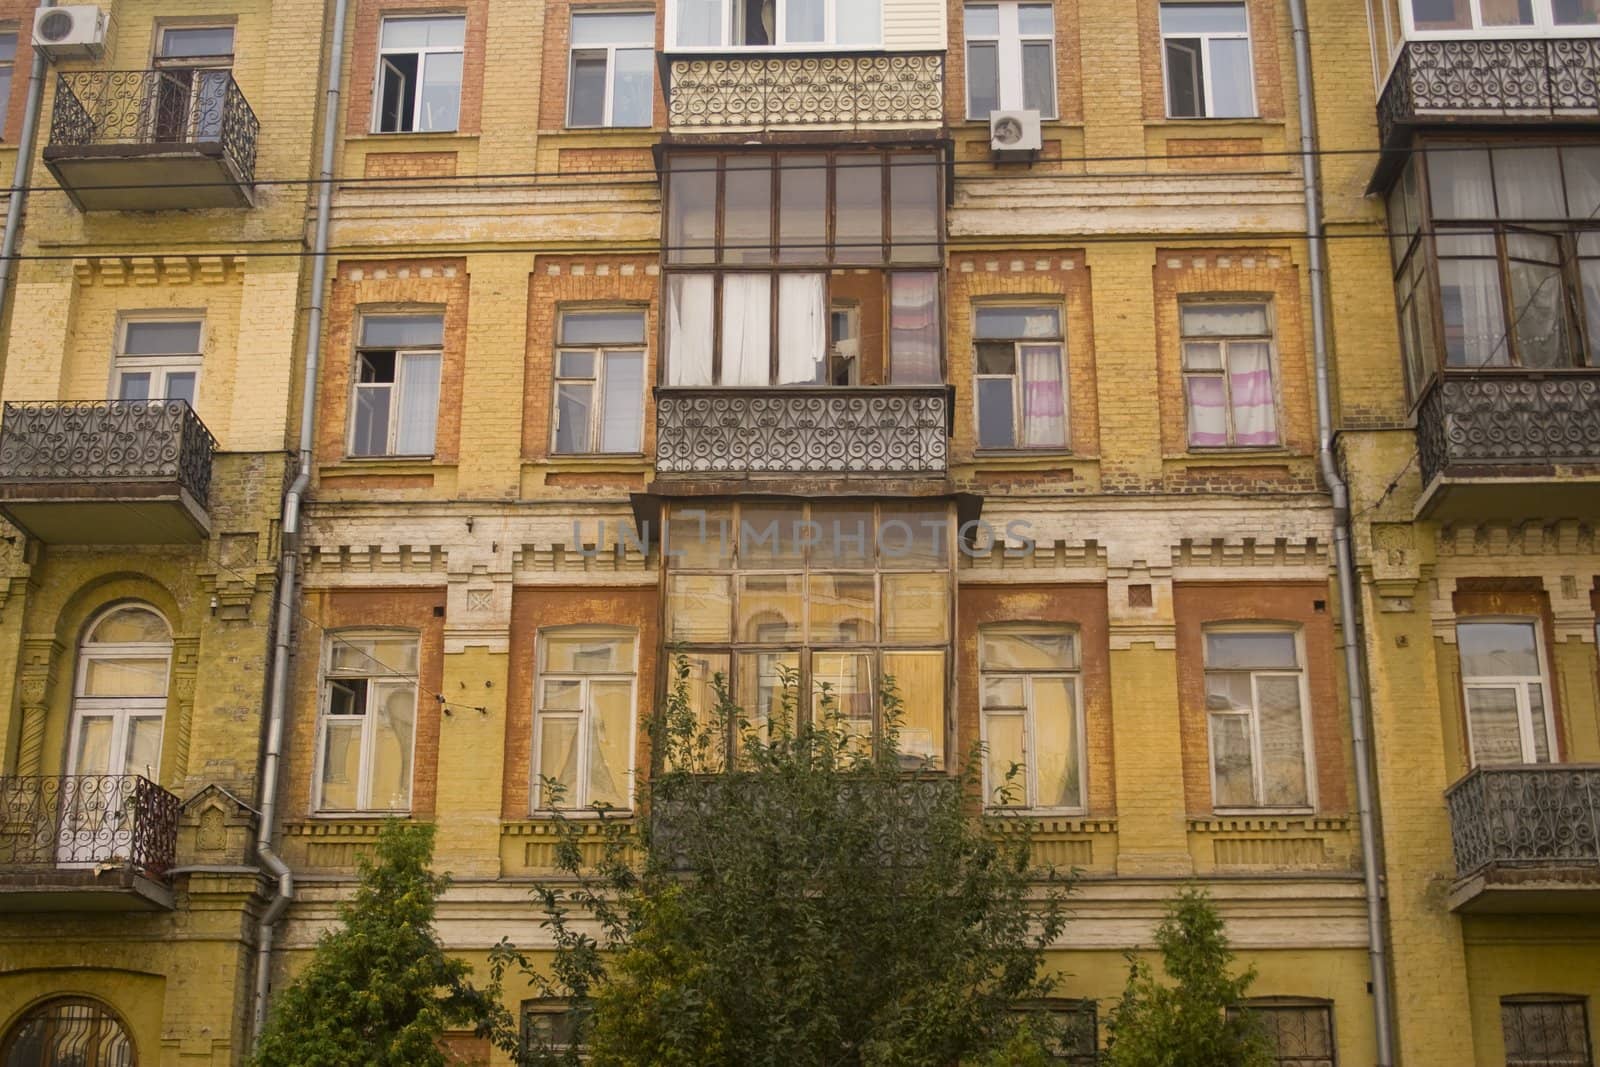 Detail of a set of elegant eastern european apartments